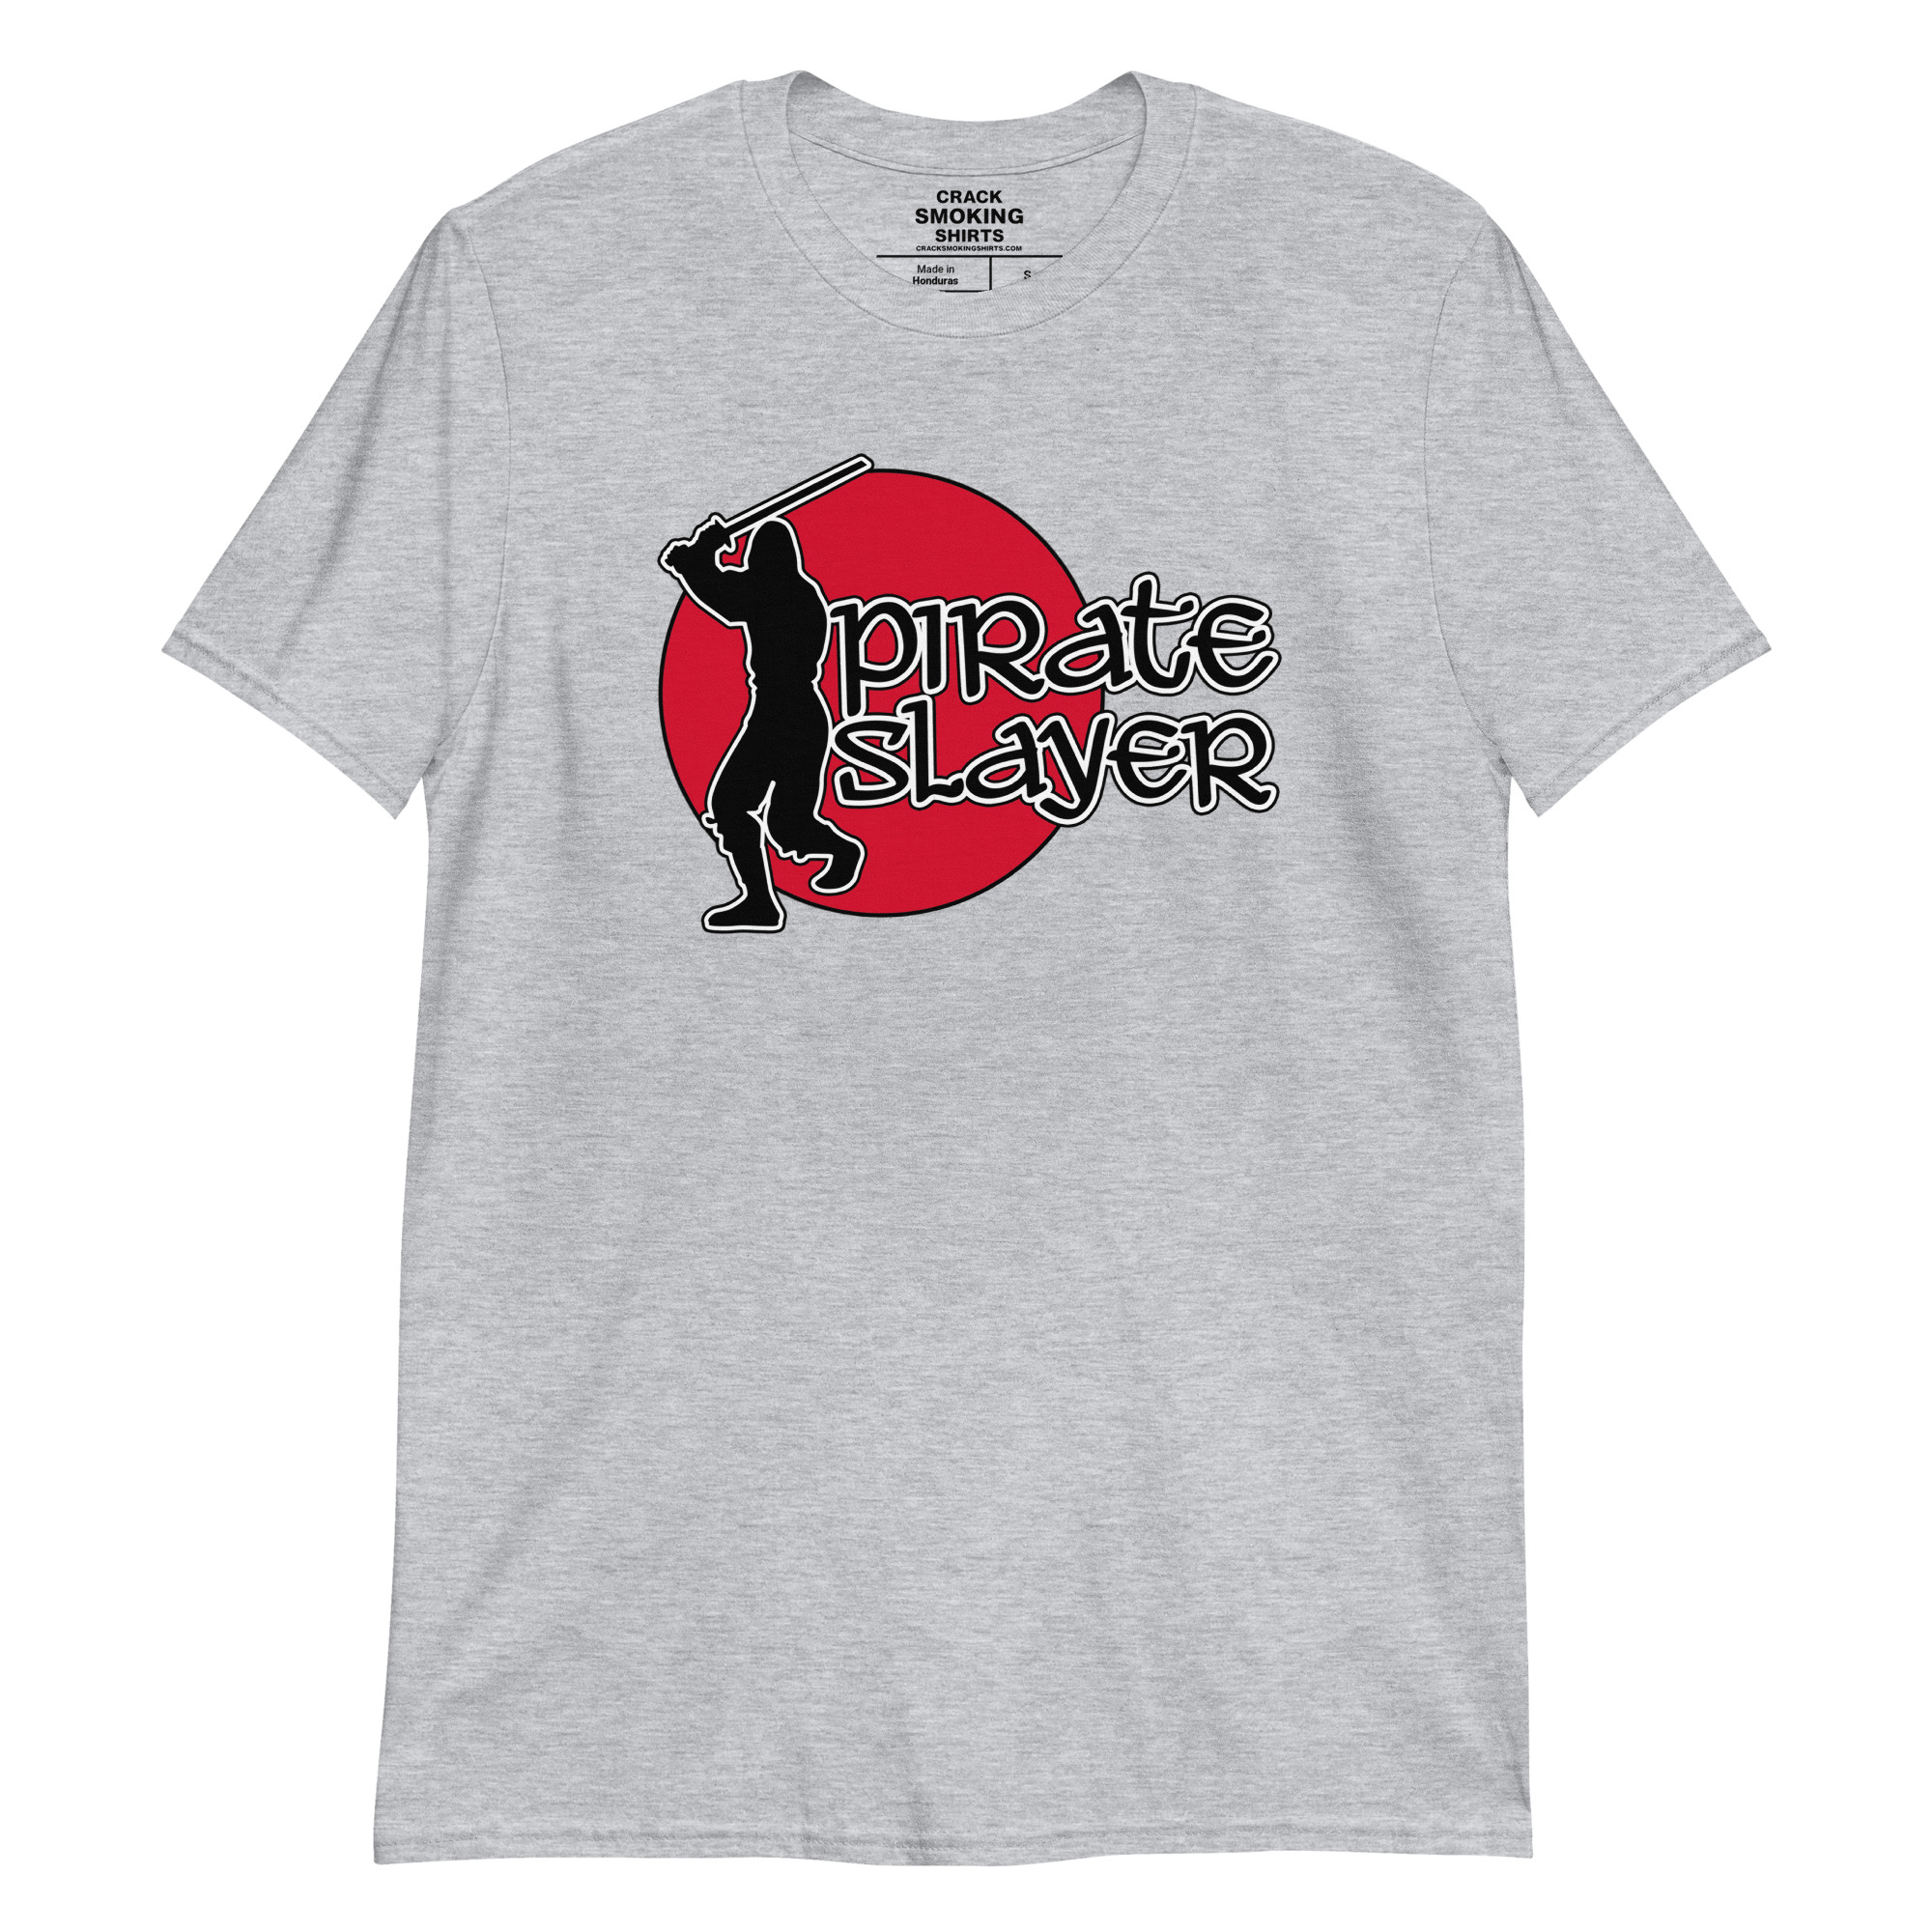 Pirate Slayer T-Shirt